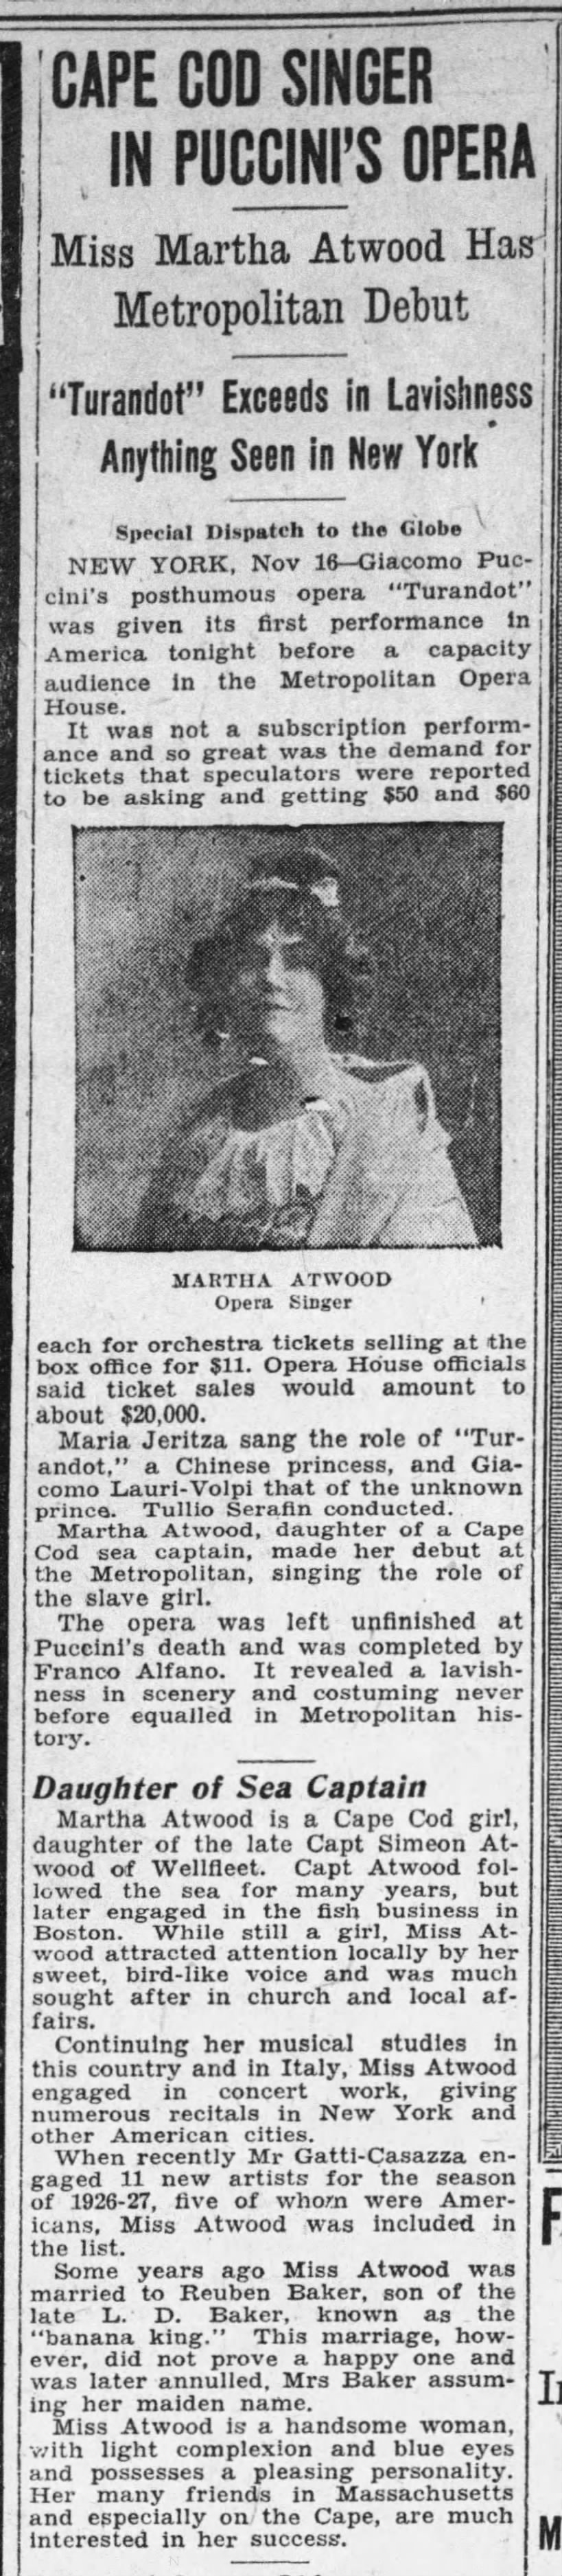 Cape Cod Singer in Puccini's Opera; Miss Martha Atwood has Metropolitan Debut